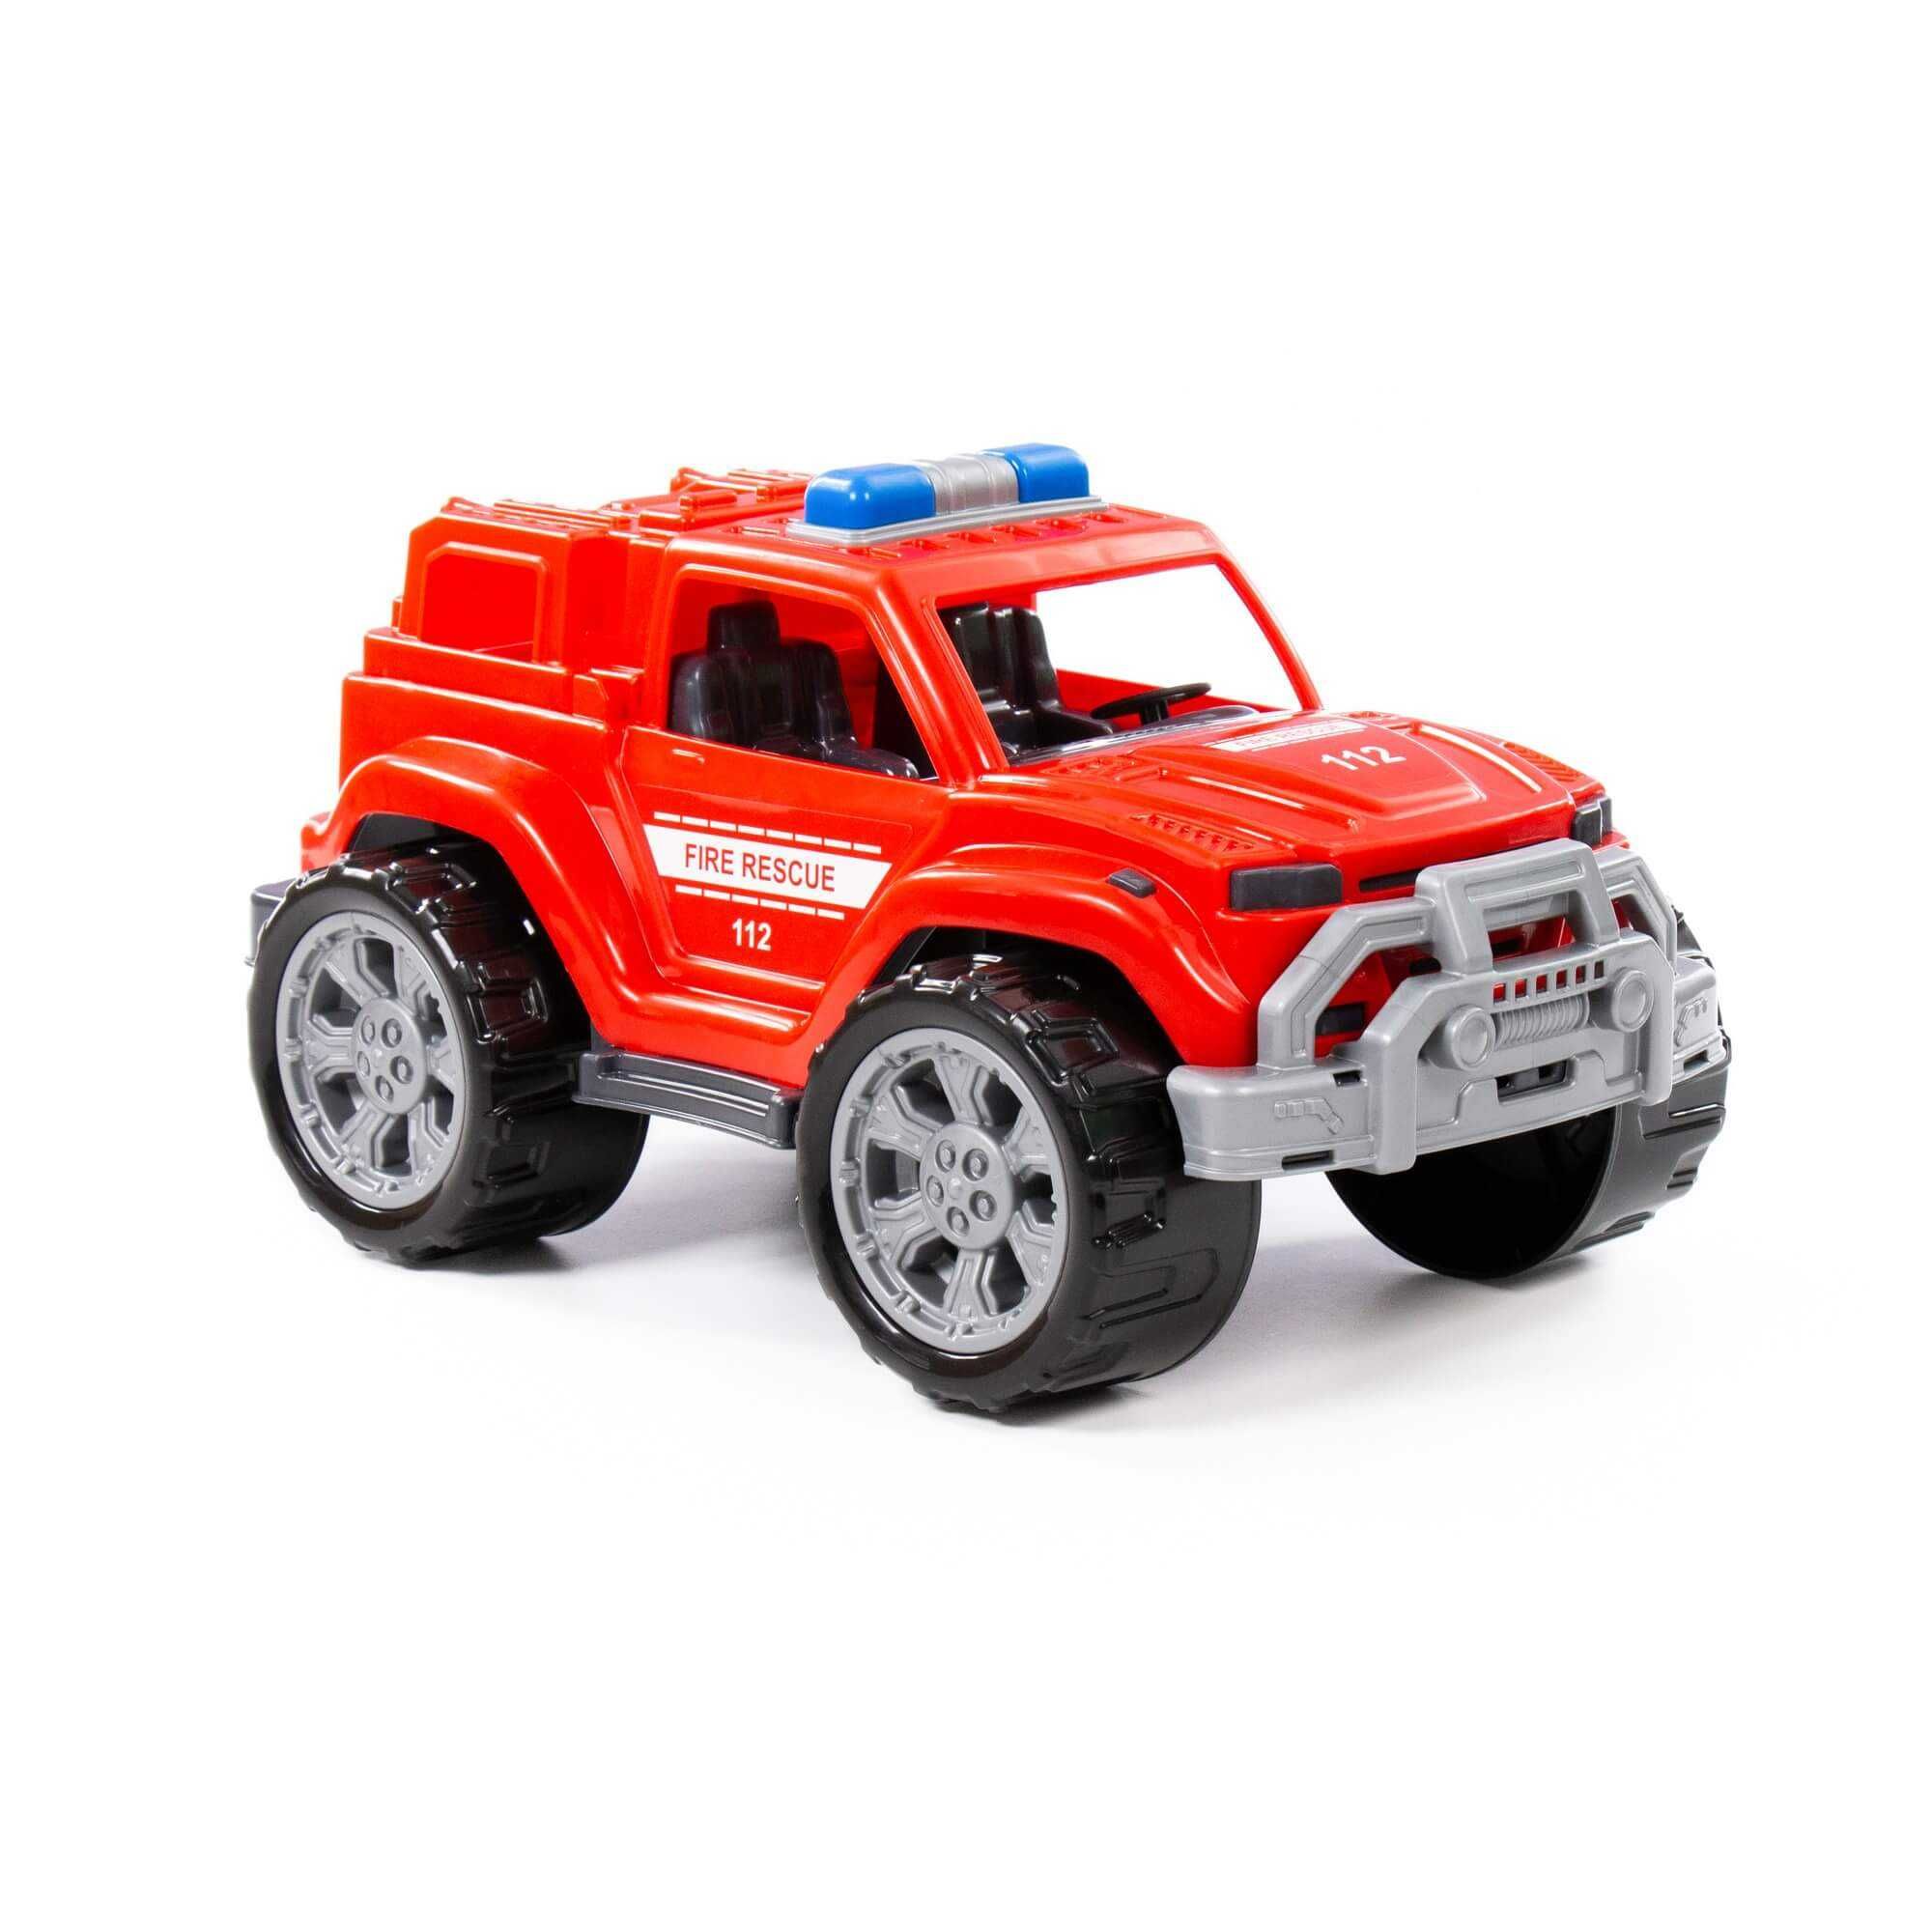 Samochód Jeep Legion straż pożarna